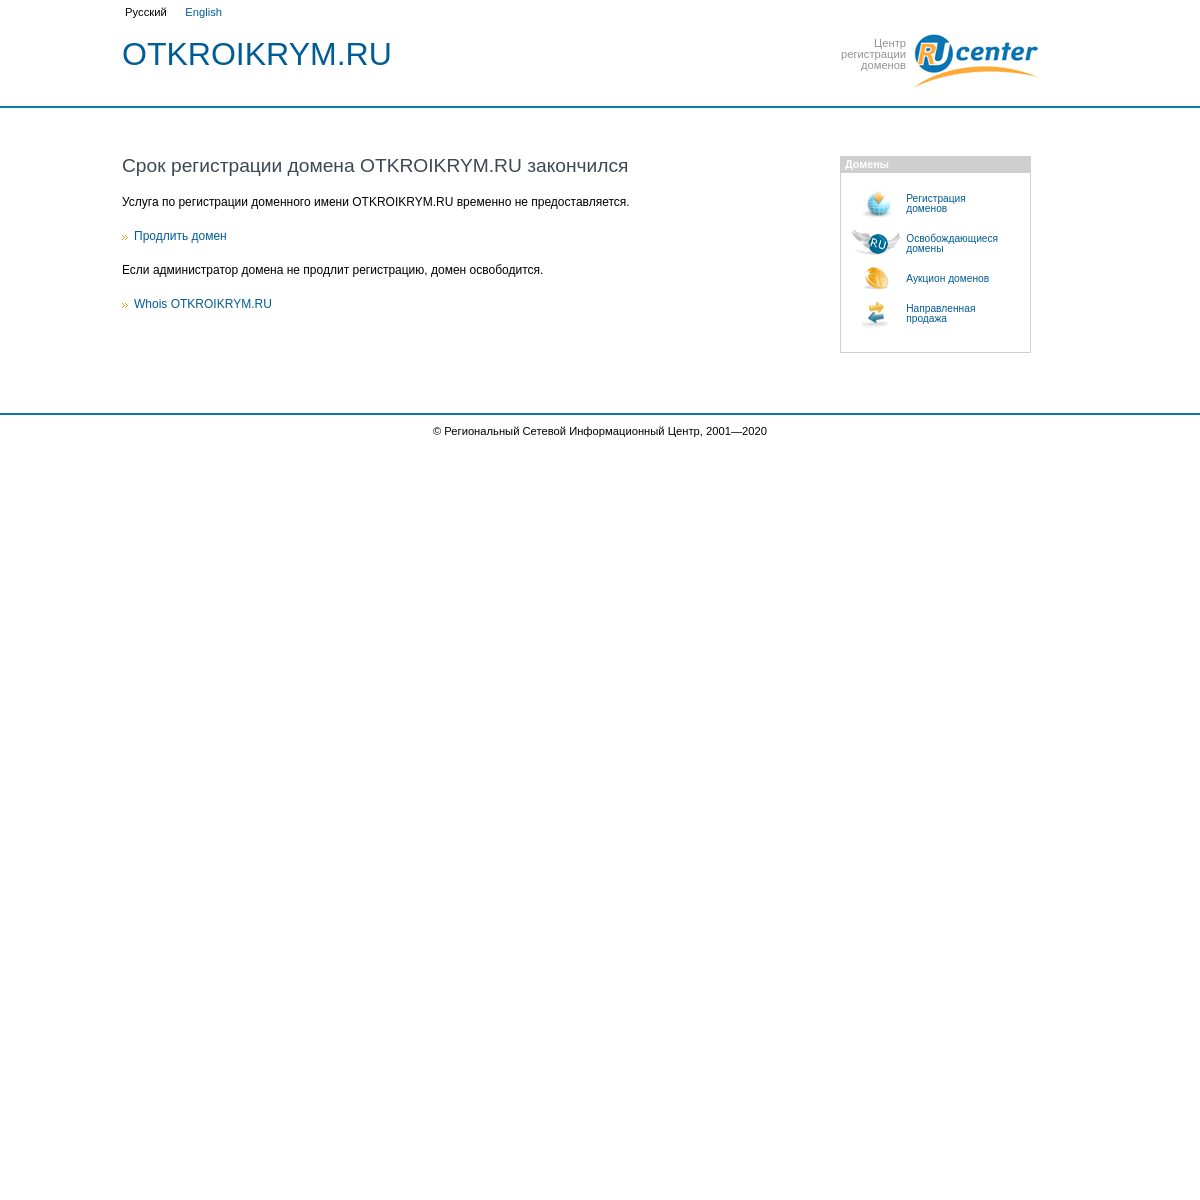 A complete backup of otkroikrym.ru